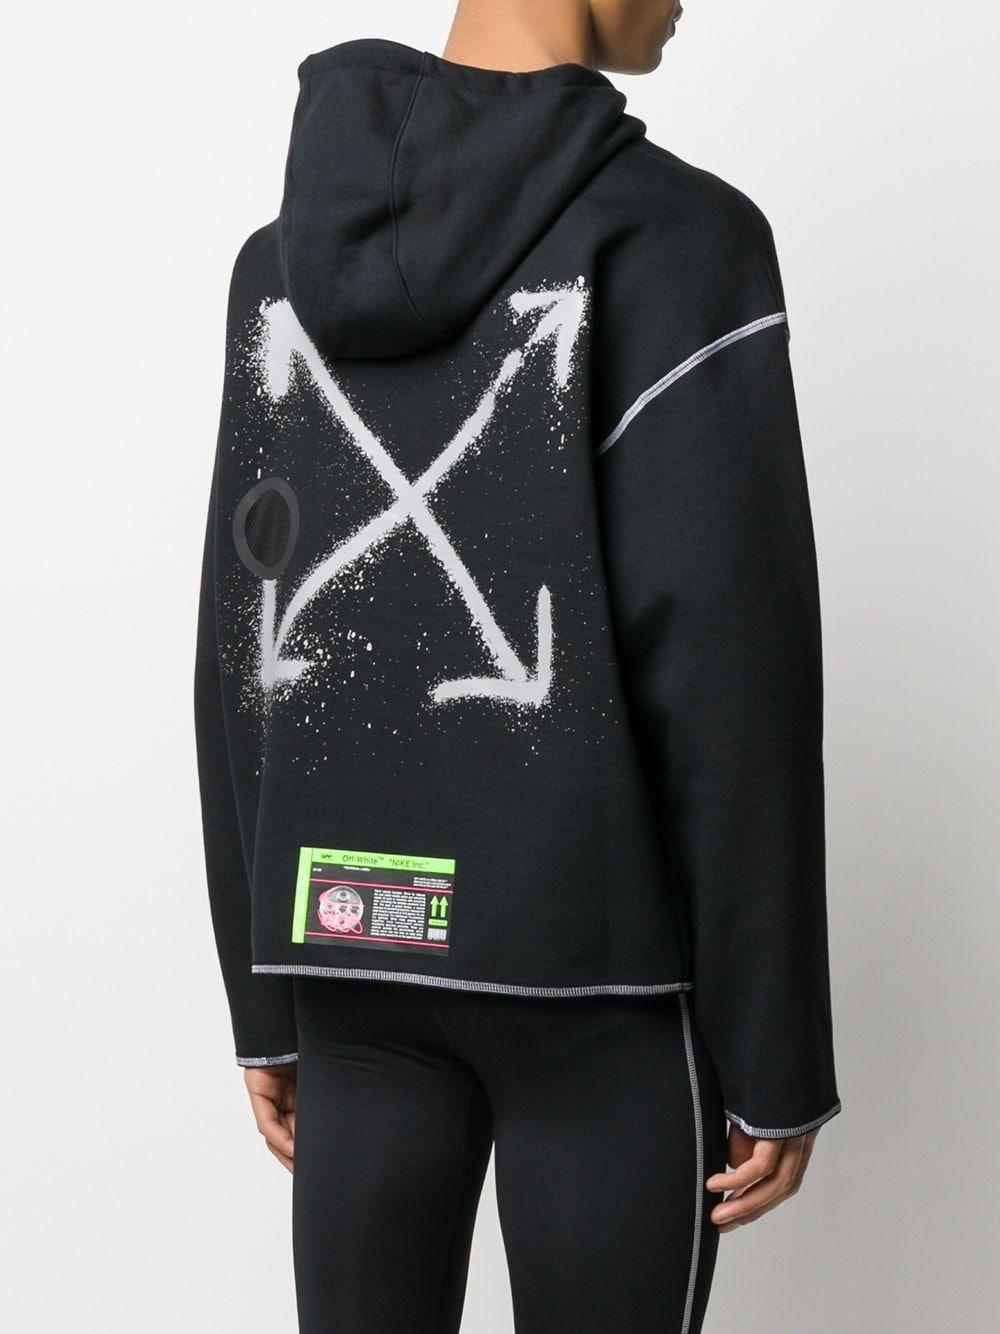 off-white x nike hoodie black 2020